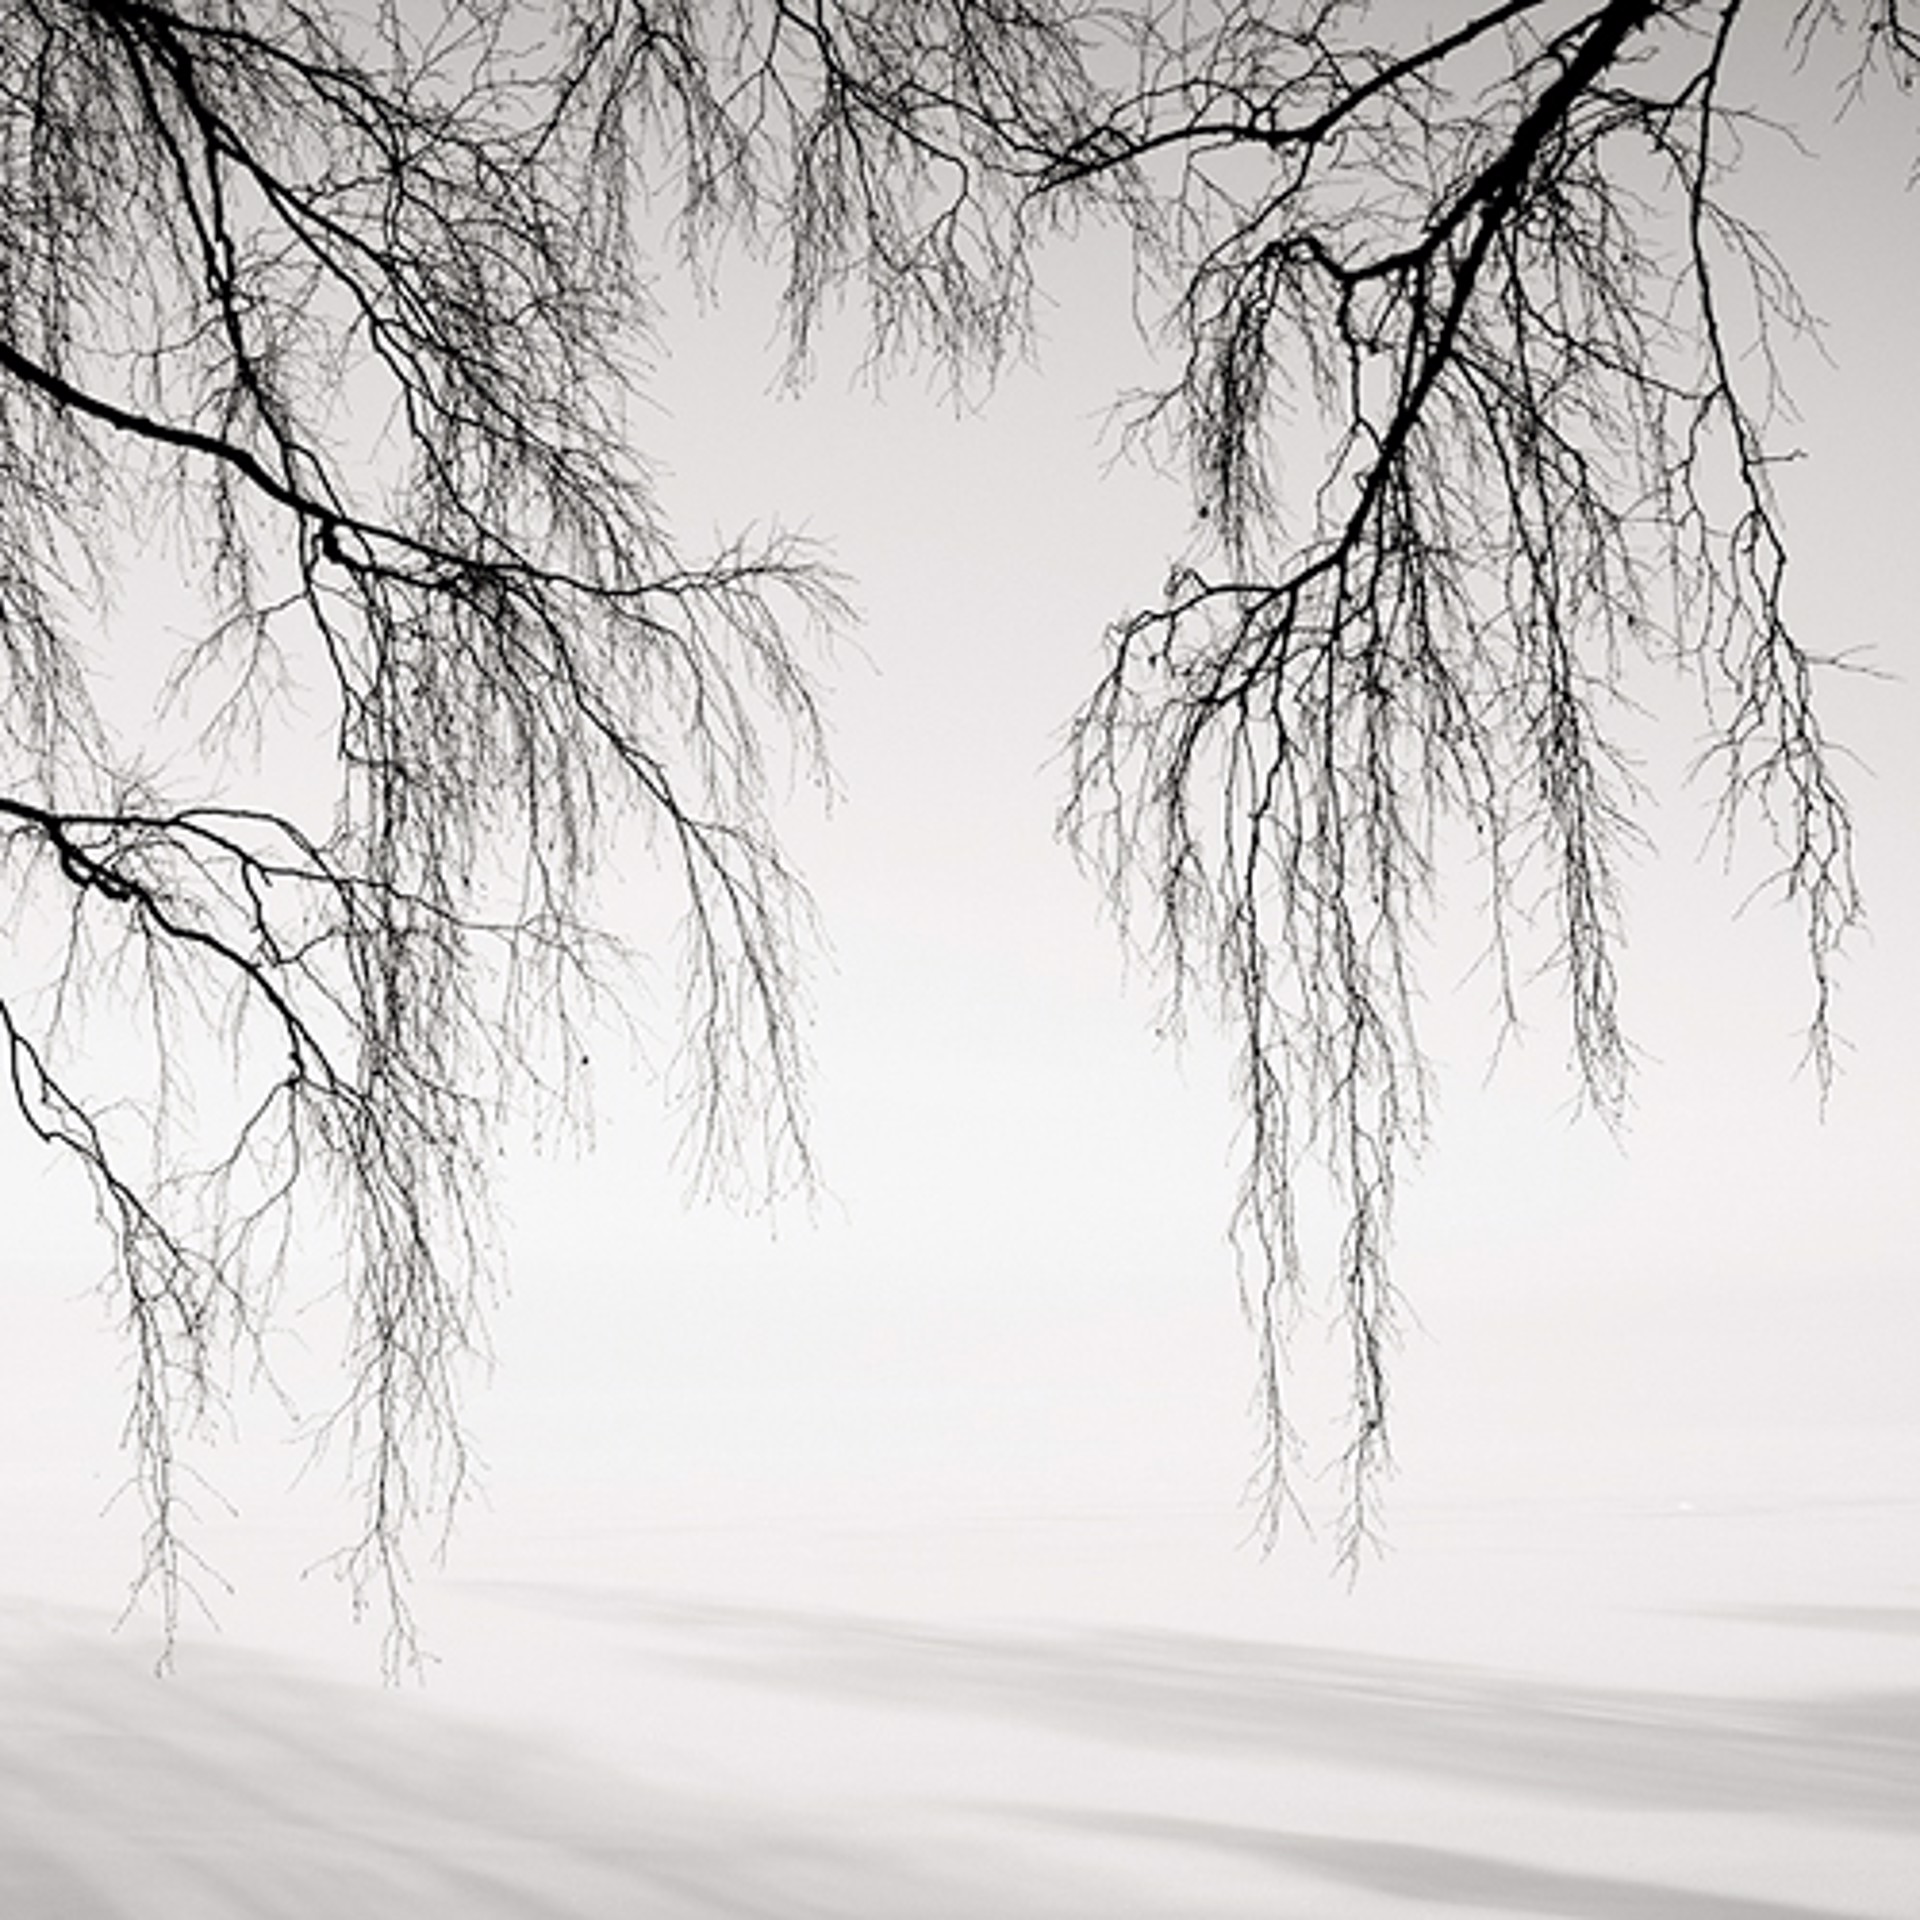 Winter Study by Josef Hoflehner